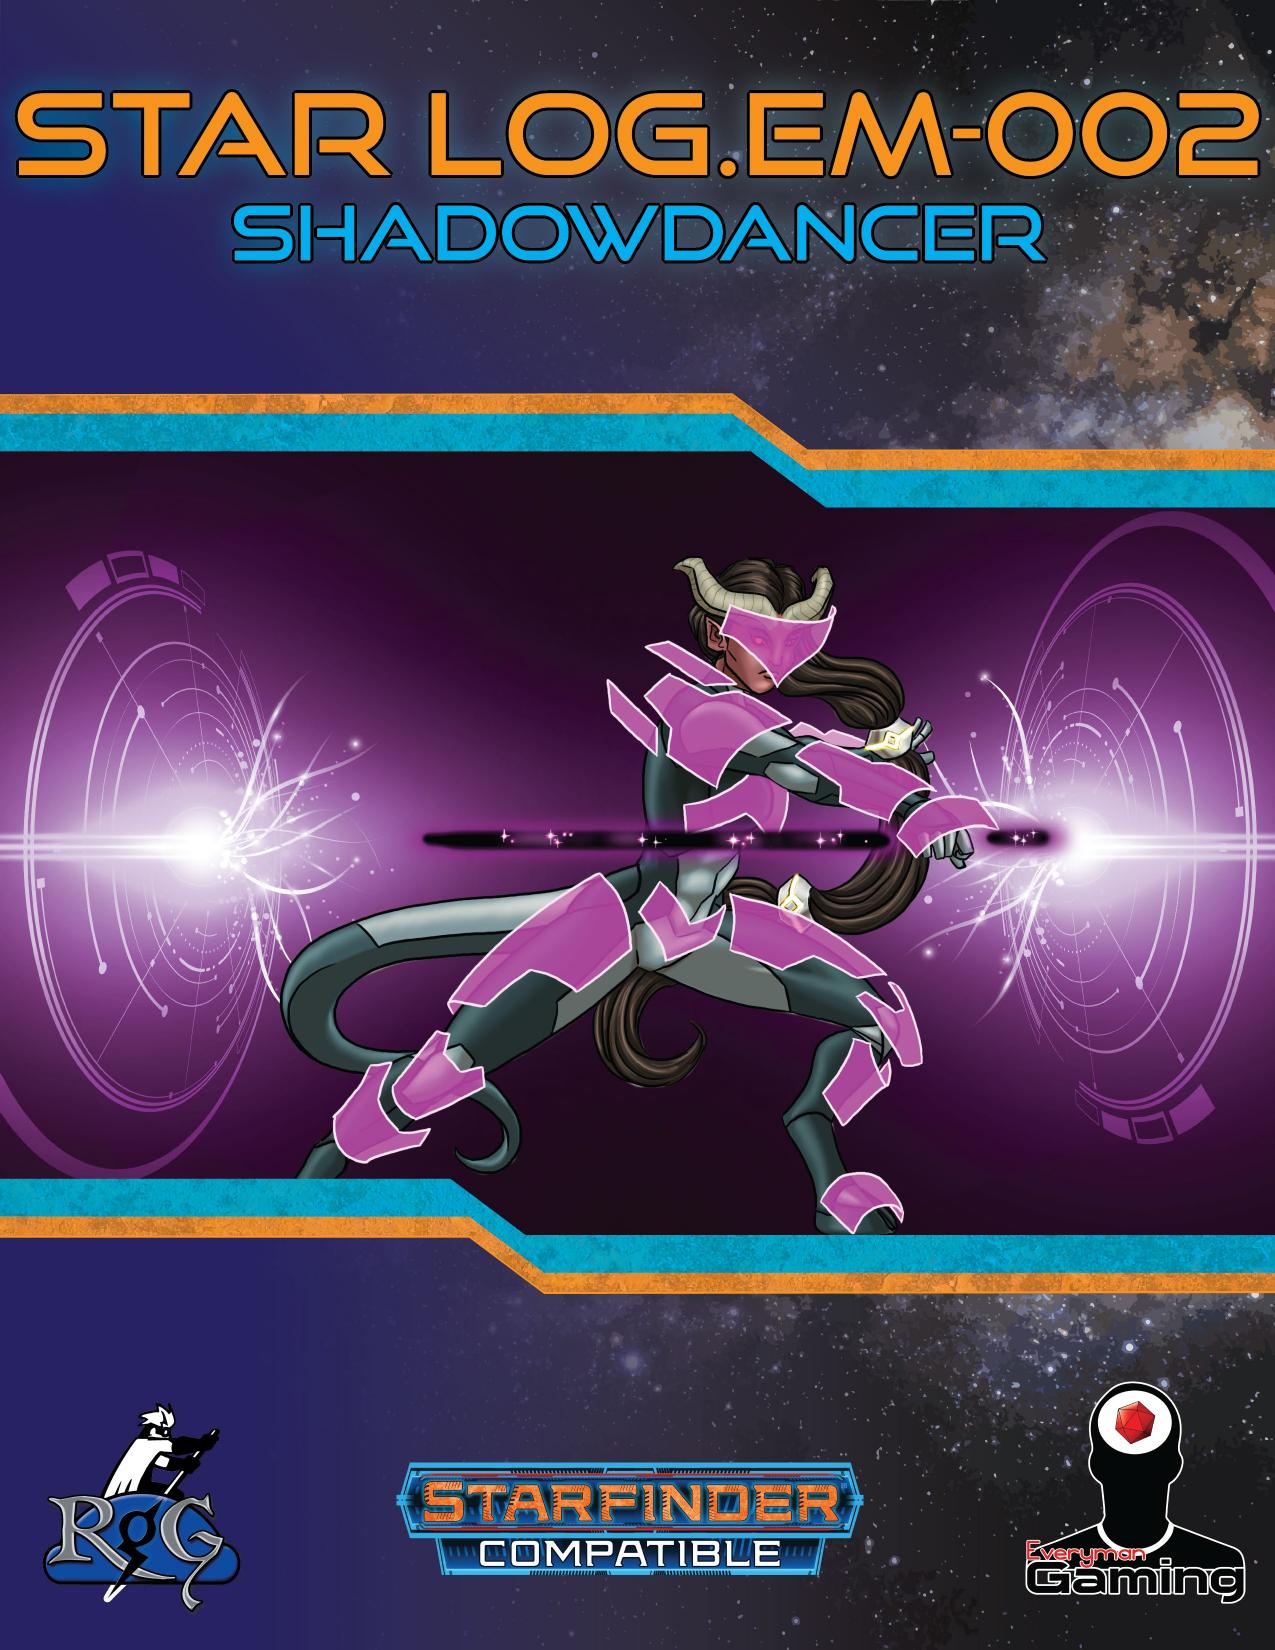 Star LogEM-002 Shadowdancer